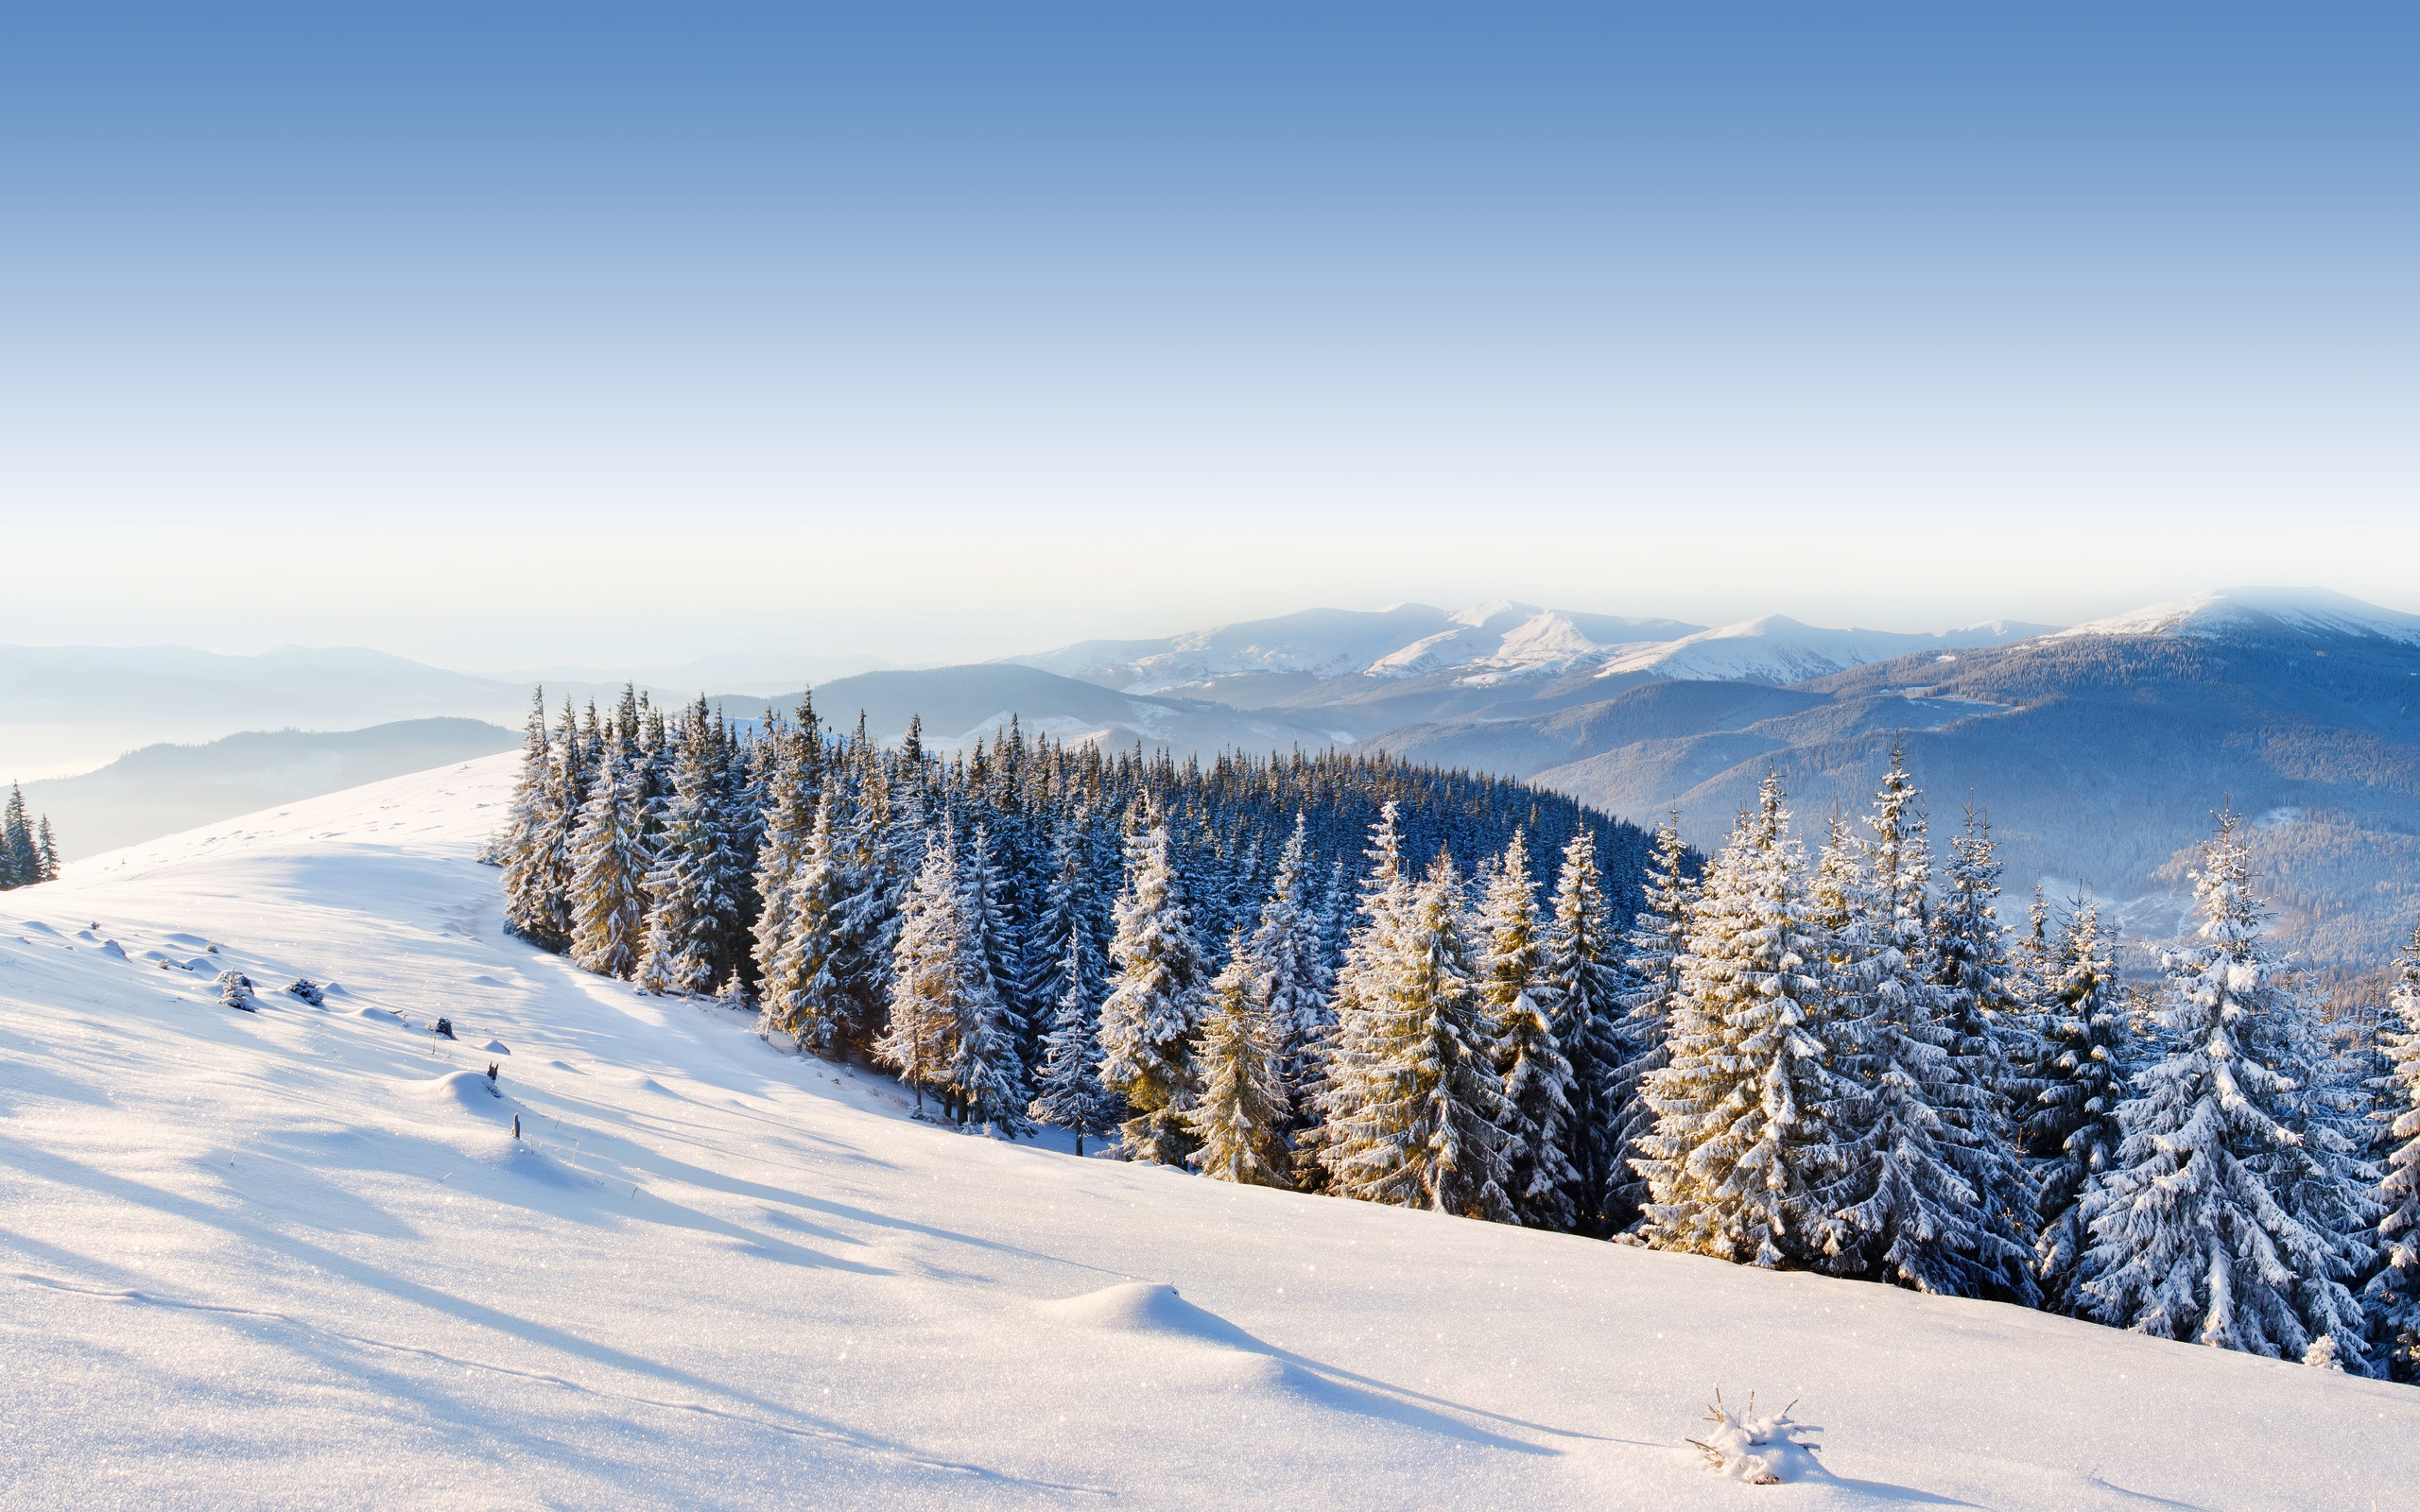 2560x1600 Winter mountain landscape hd images.